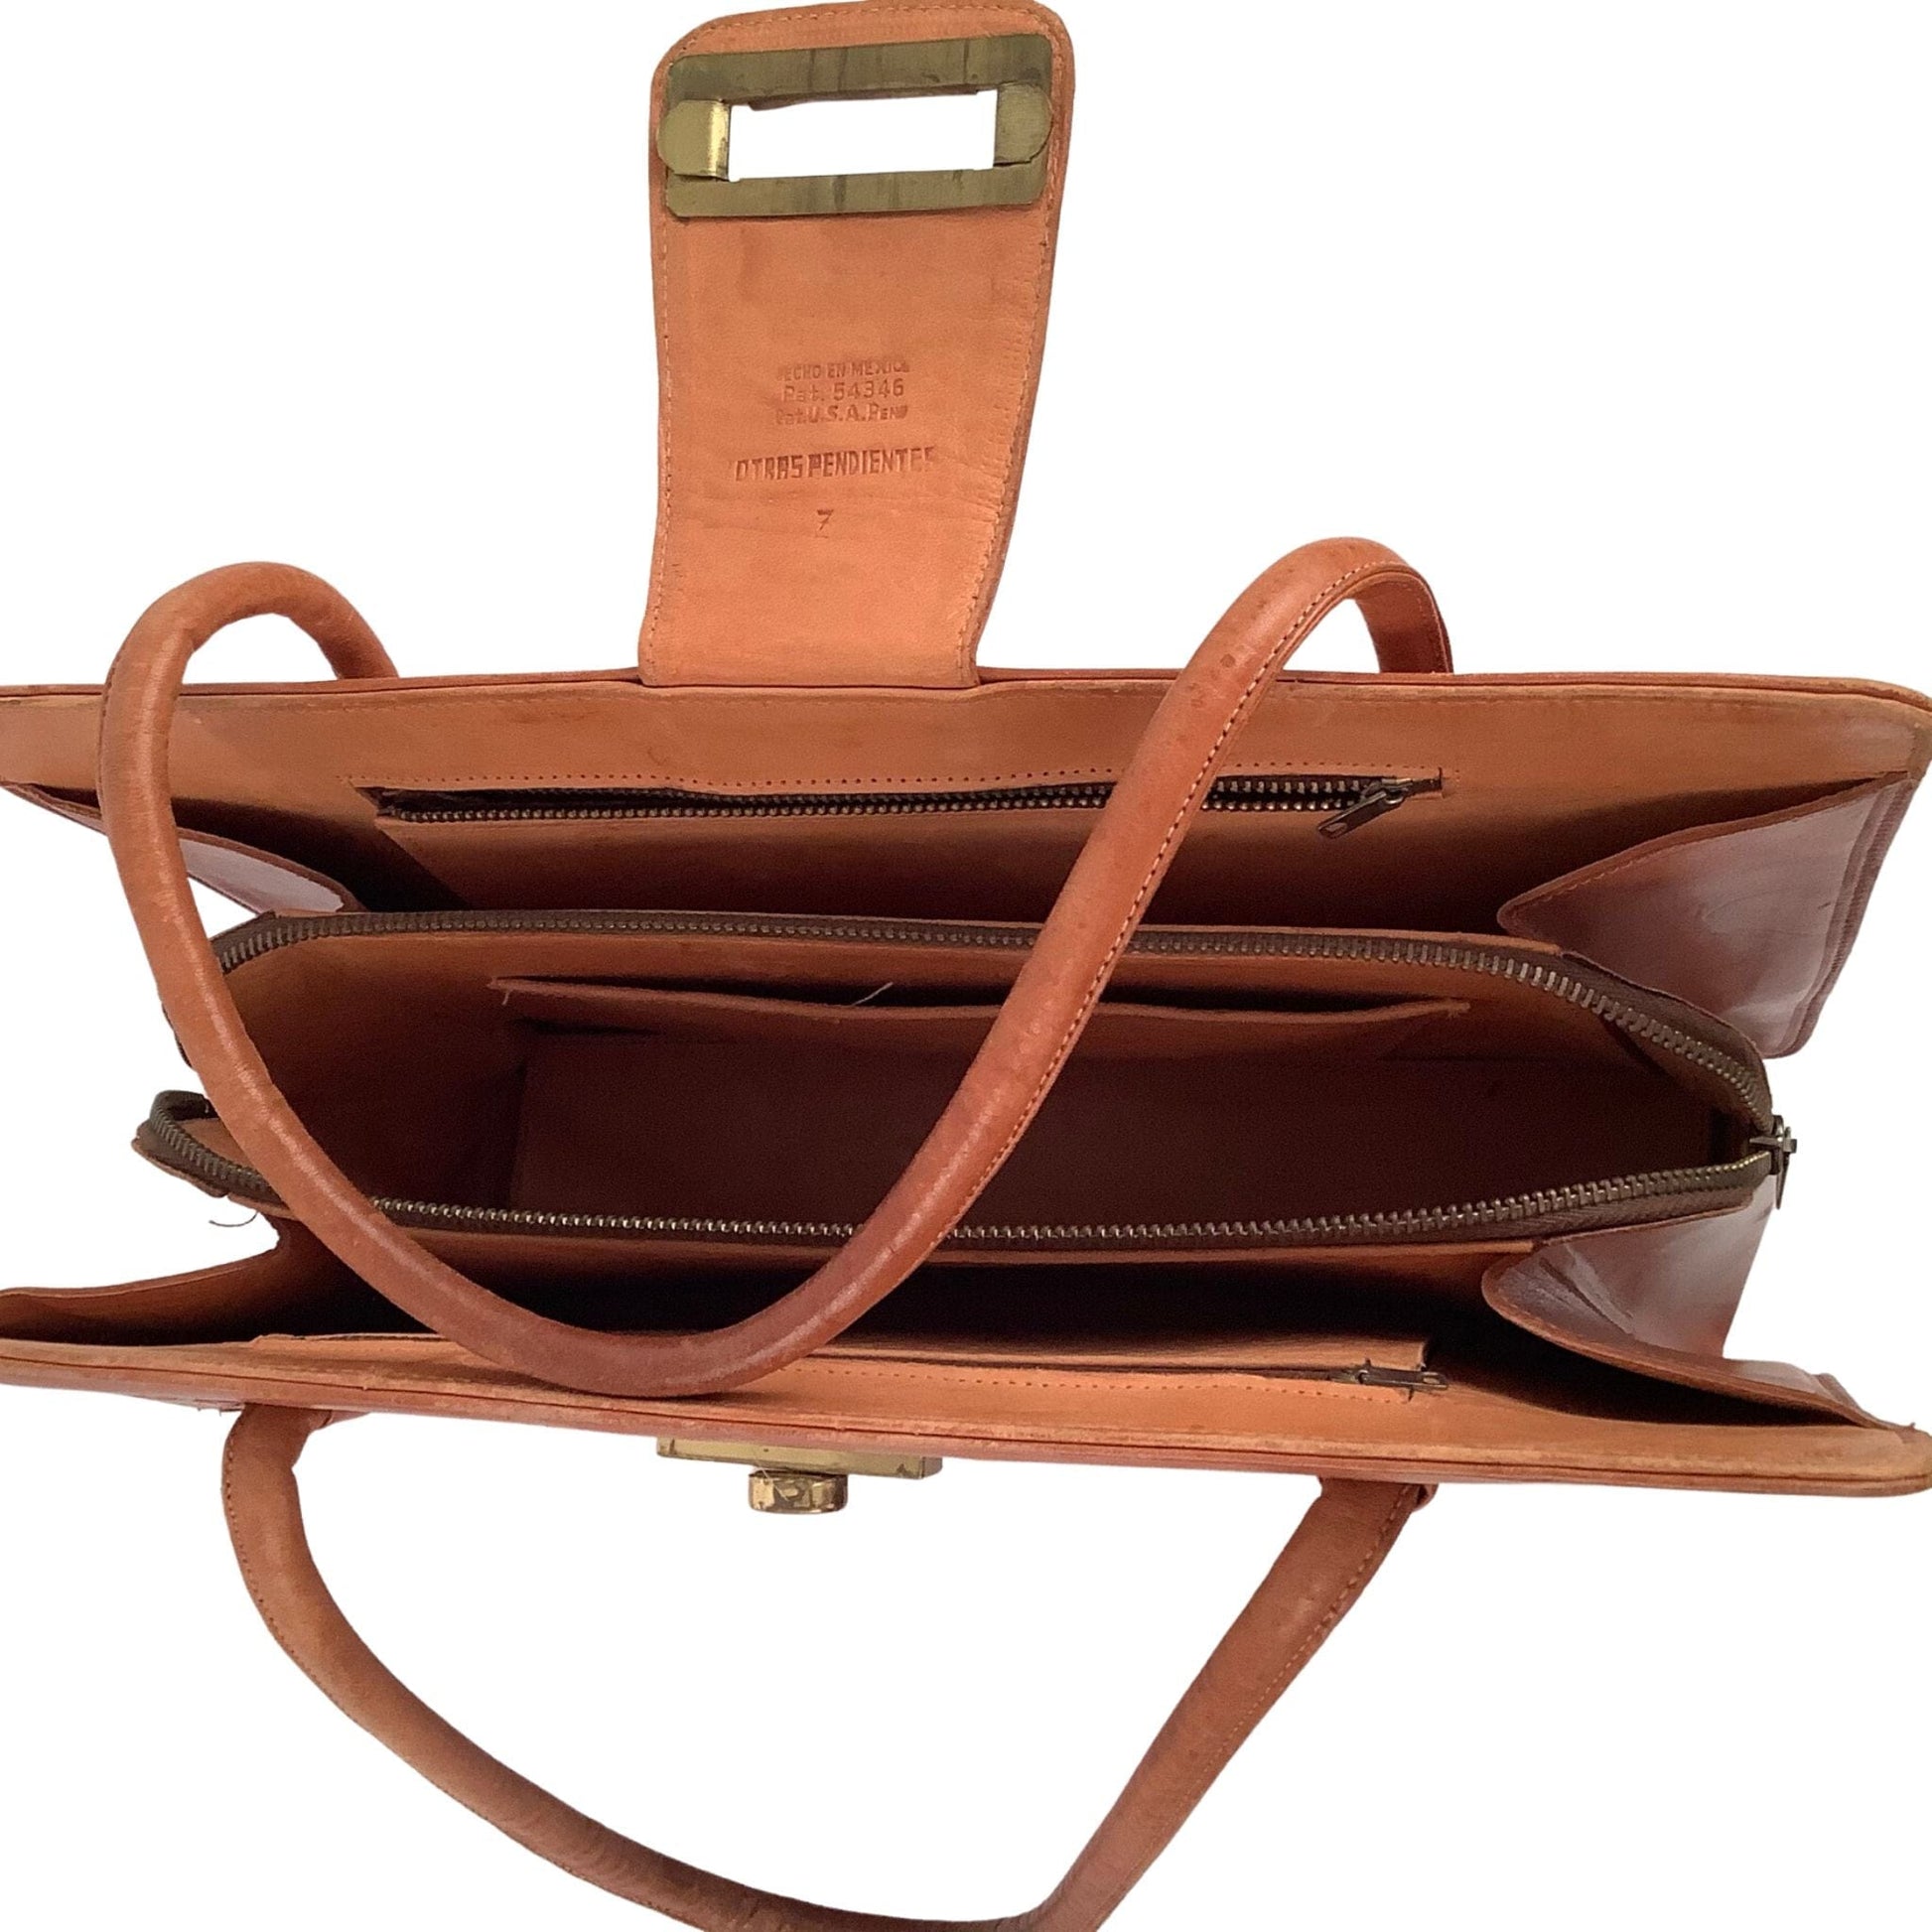 1930s Spanish Revival Handbag Tan / Leather / Vintage 1930s